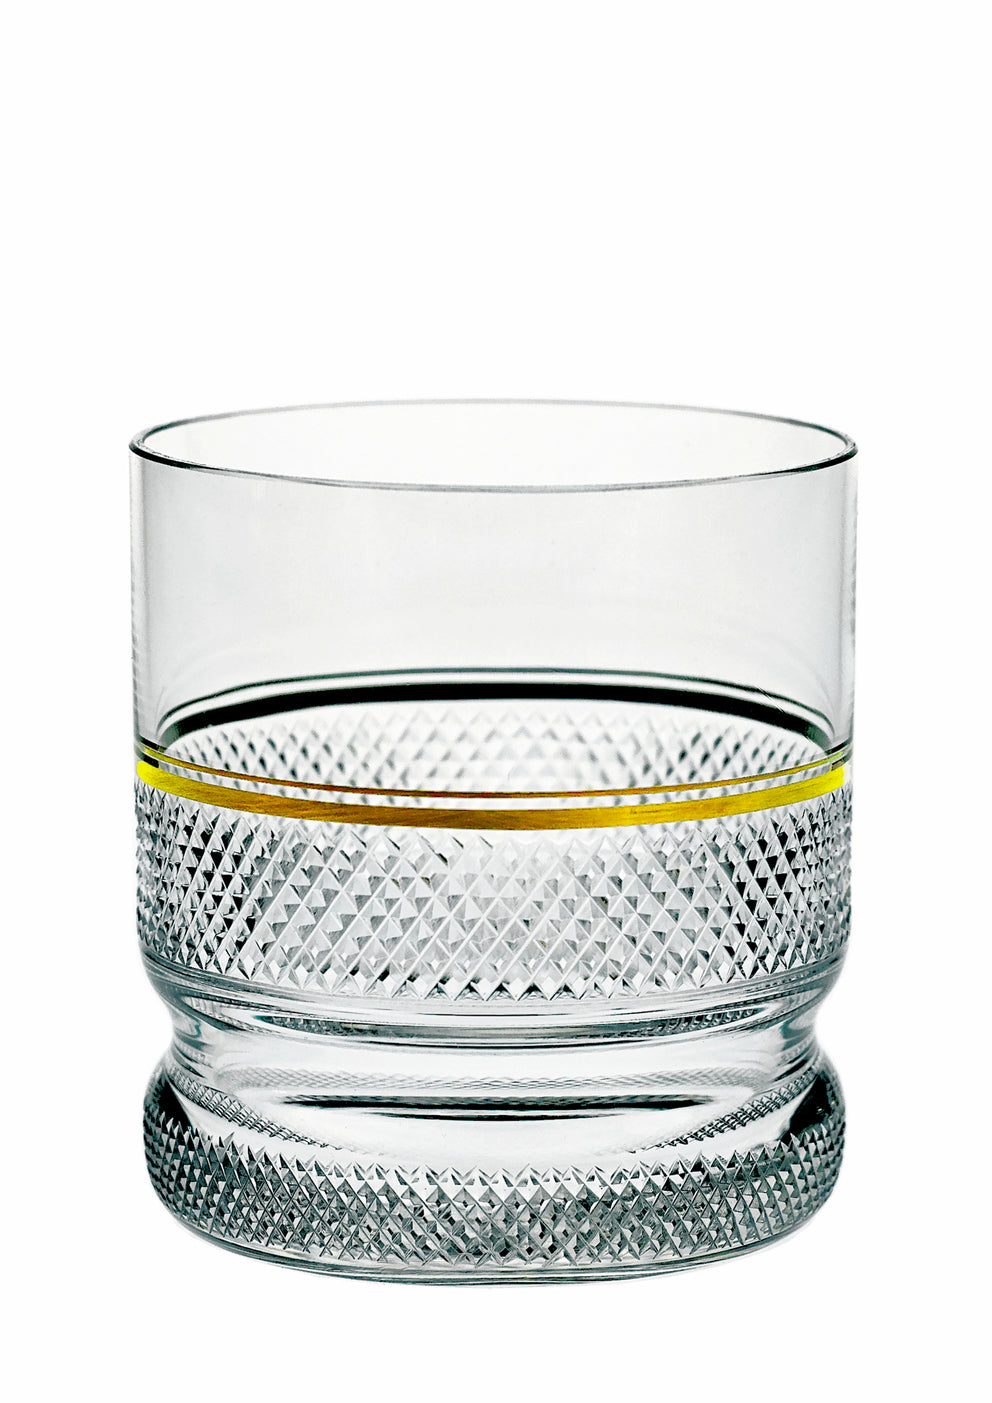 PRESTIGE klar, Diamantschliff & Goldrand - Whisky Becher 99 mm